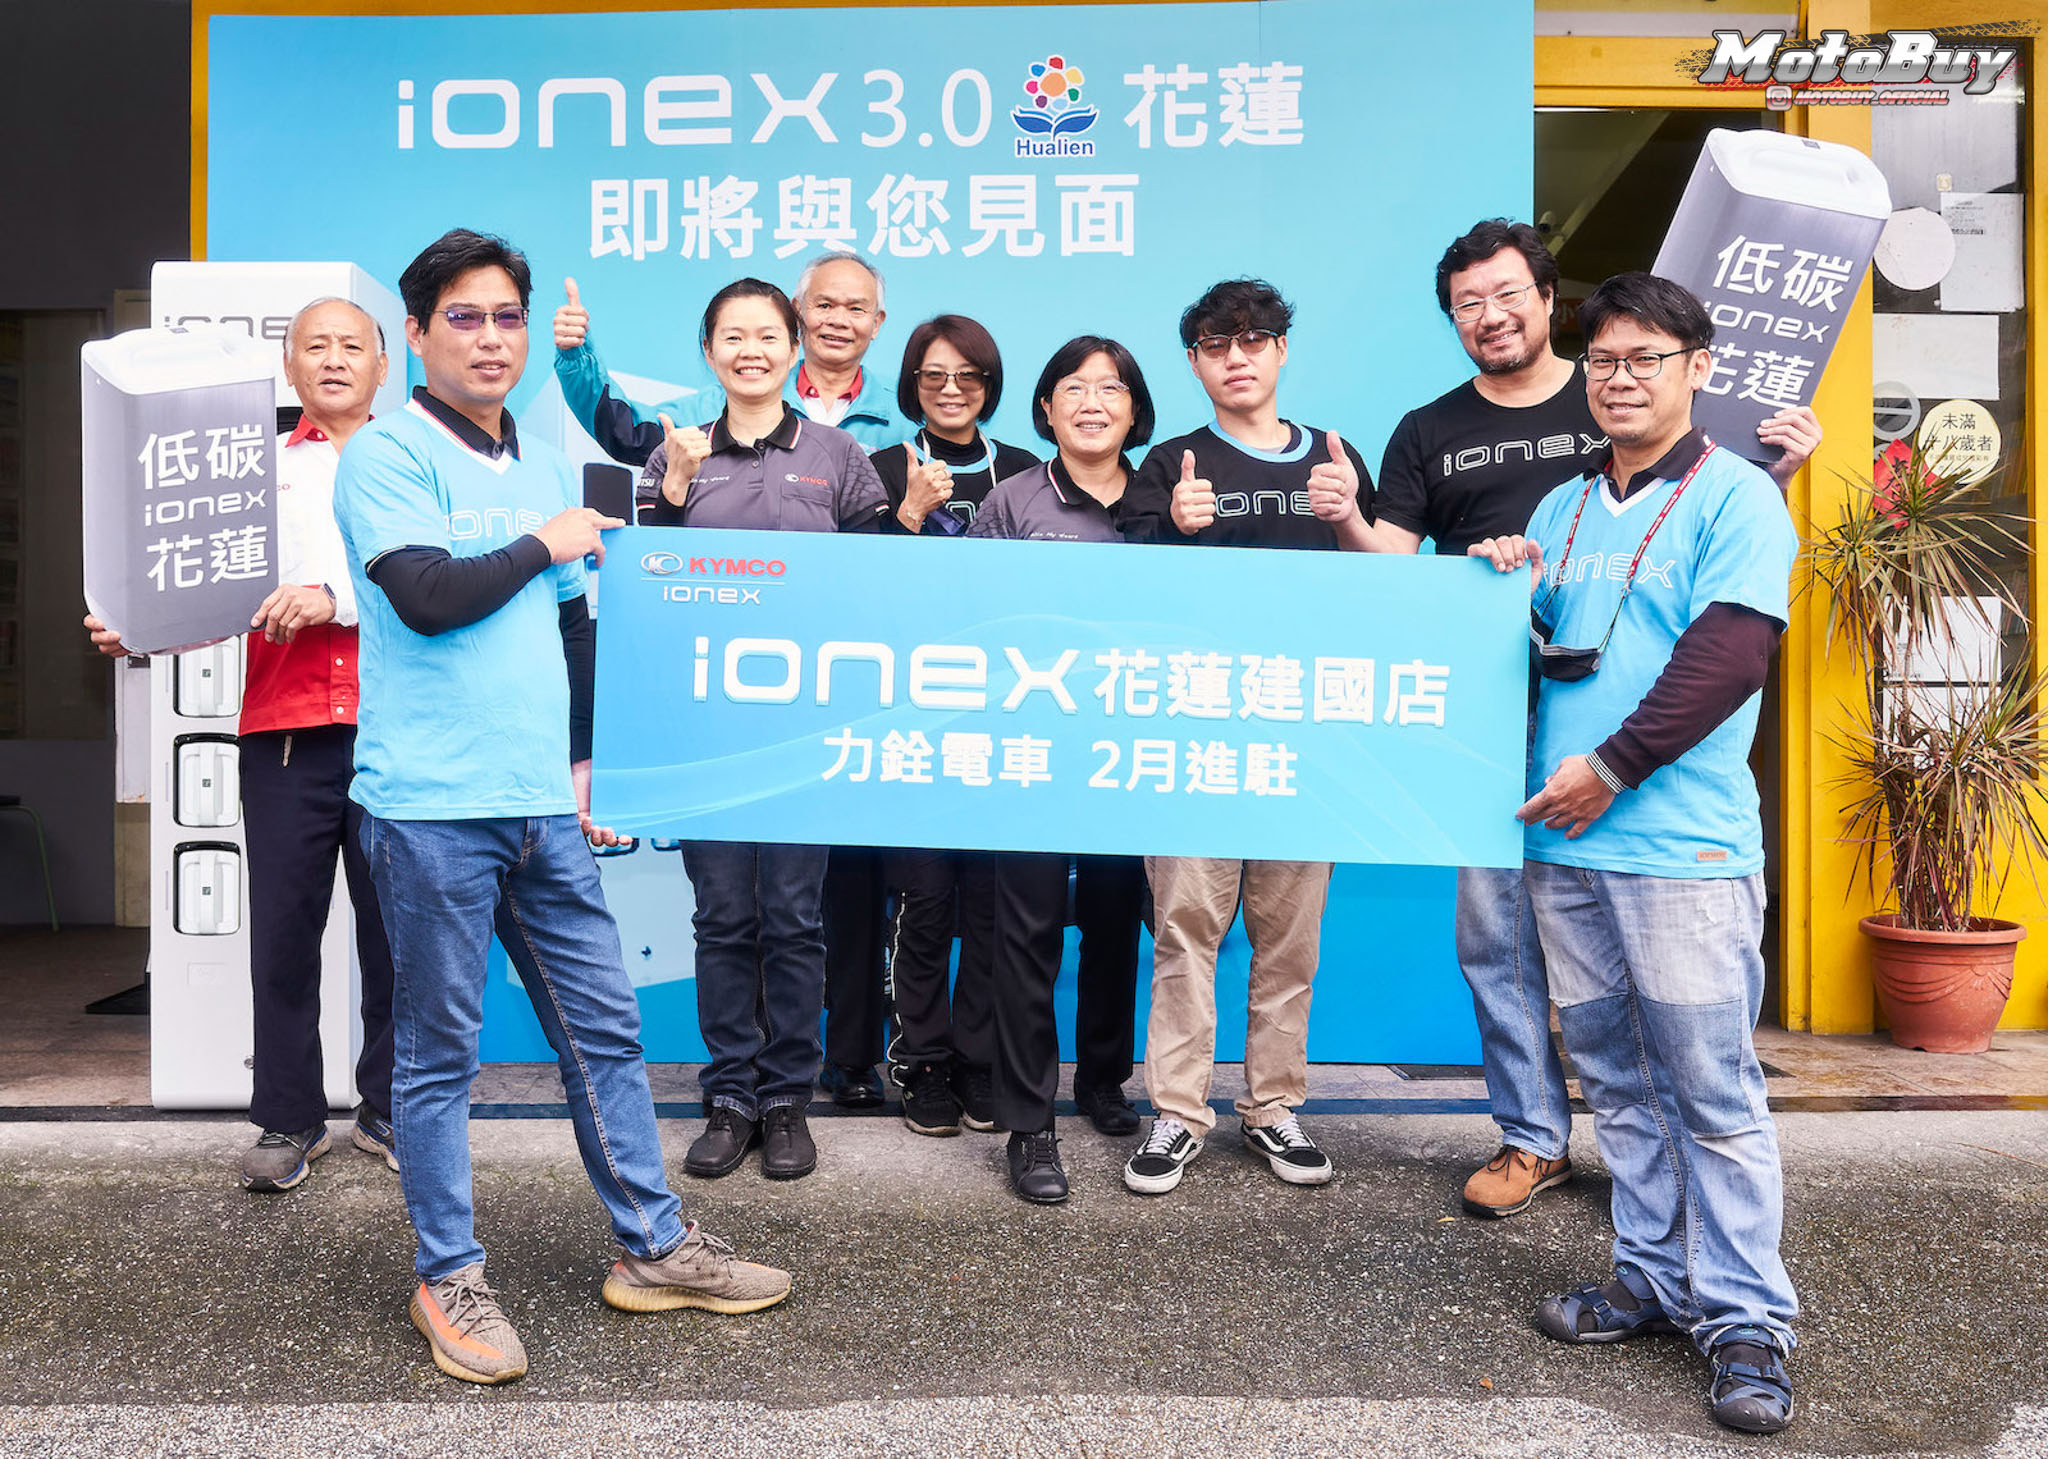 4. Ionex 營運管理處吳俊龍處長表示：花蓮地區有不少消費者來電反應，期盼Ionex 3.0能夠早日來到花蓮，提供市場新的選擇，預計最快二月就能在花蓮與消費者見面。